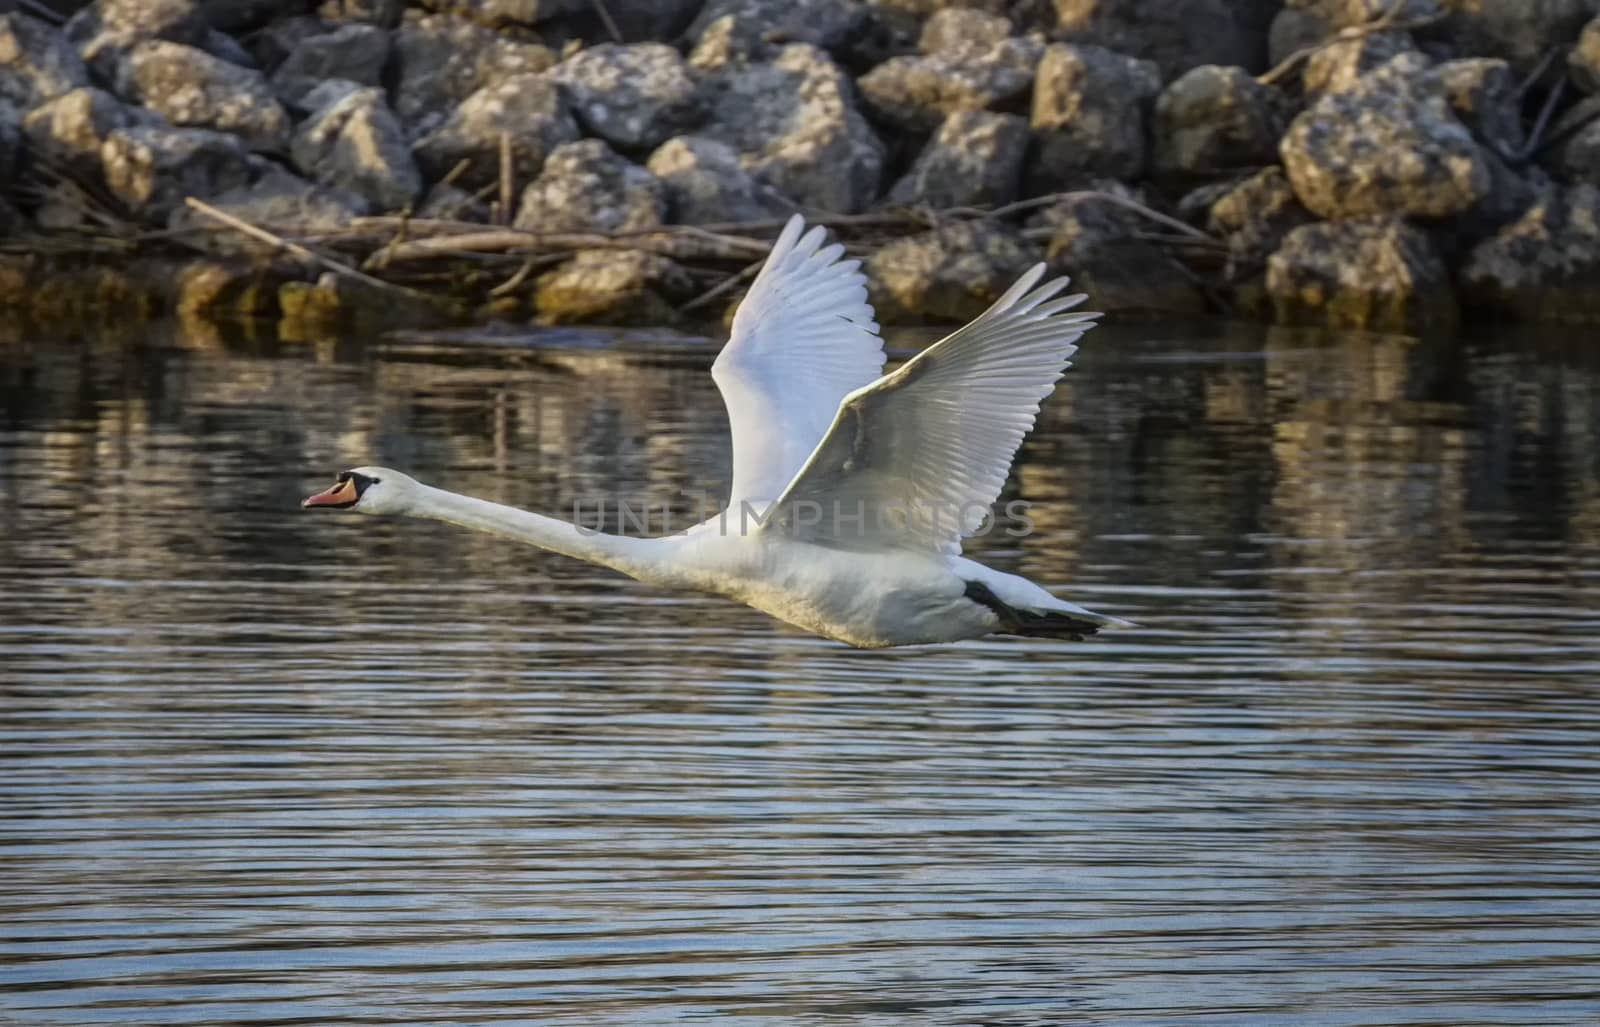 Mute swan, cygnus olor, flying by Elenaphotos21